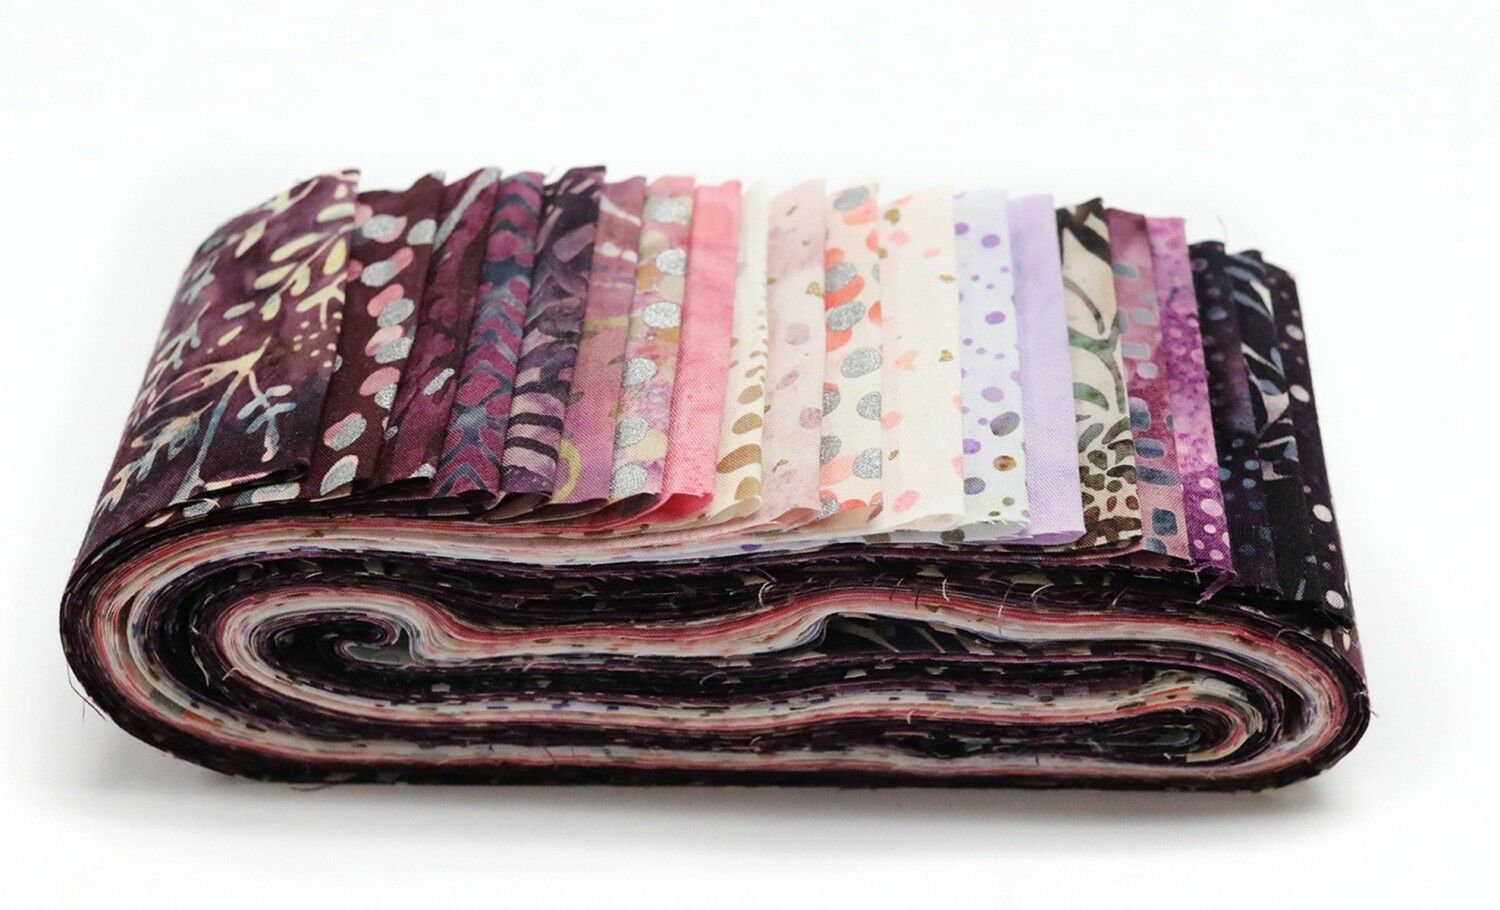 Hoffman Bali Poppy - 666 GENES ORCHID 2.5'' x 20 Strips Fabric roll up